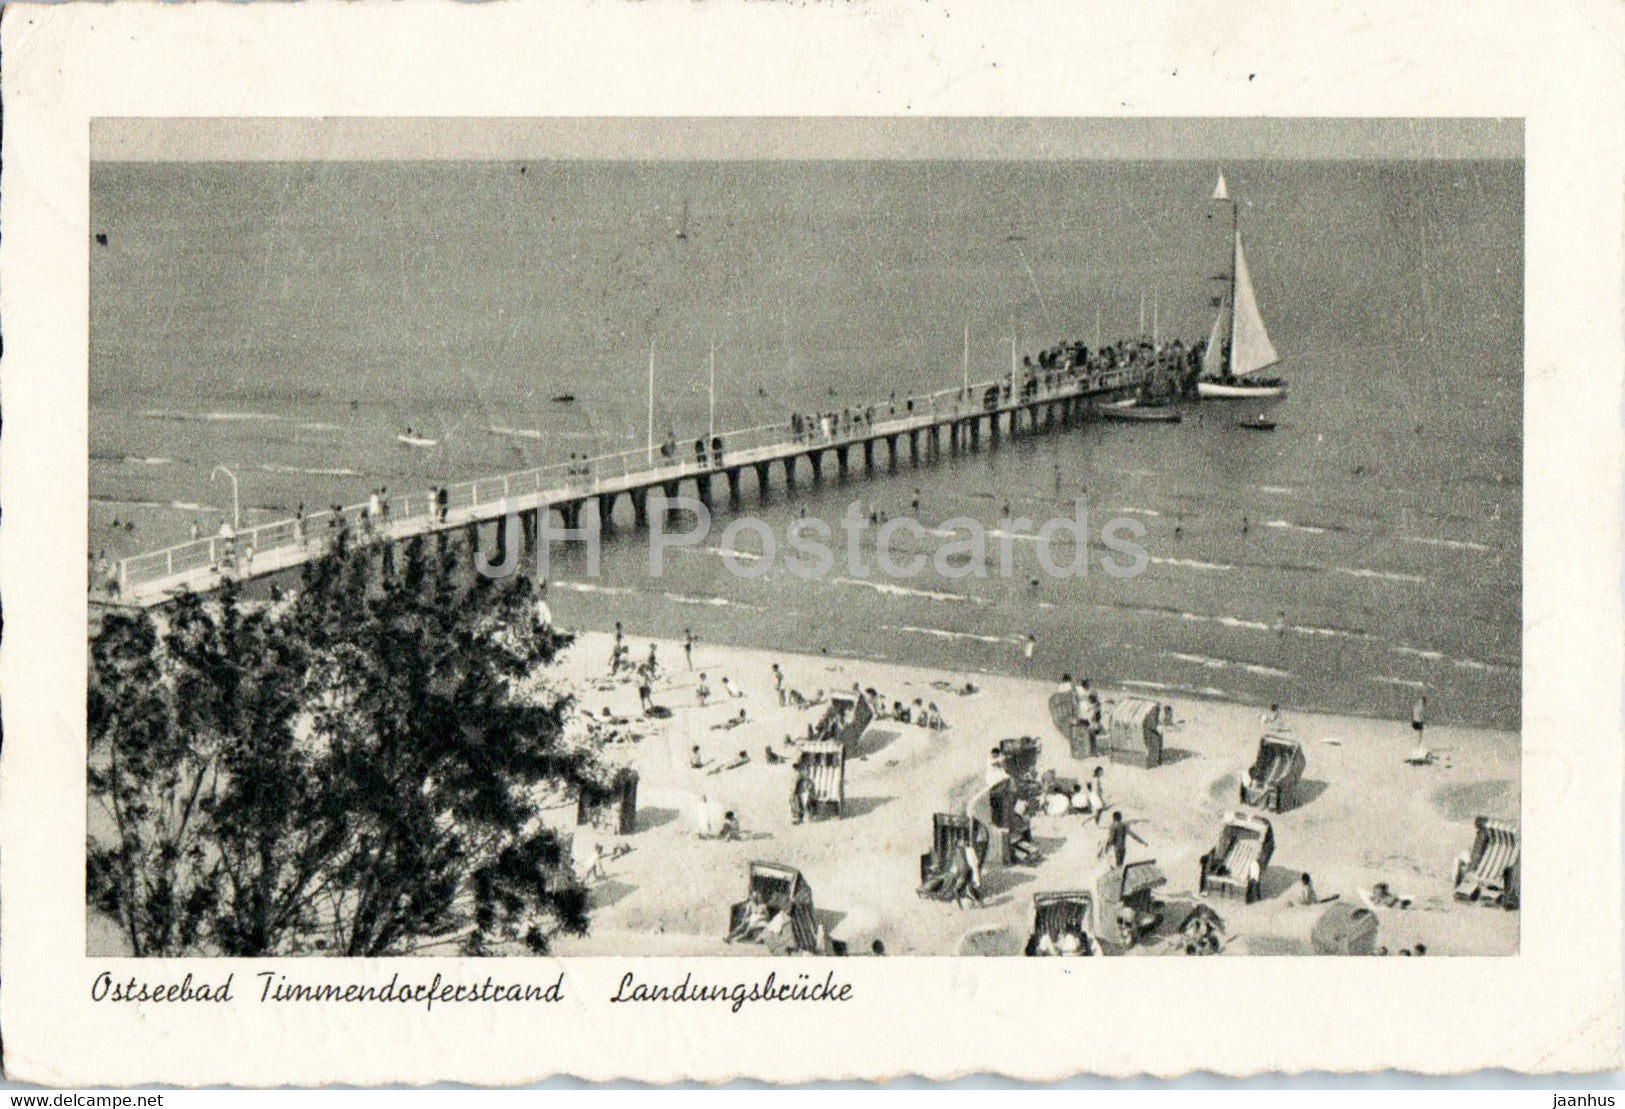 Ostseebad Timmendorferstrand - Timmendorfer Strand - Landungsbrucke - beach - old postcard - 1958 - Germany - used - JH Postcards